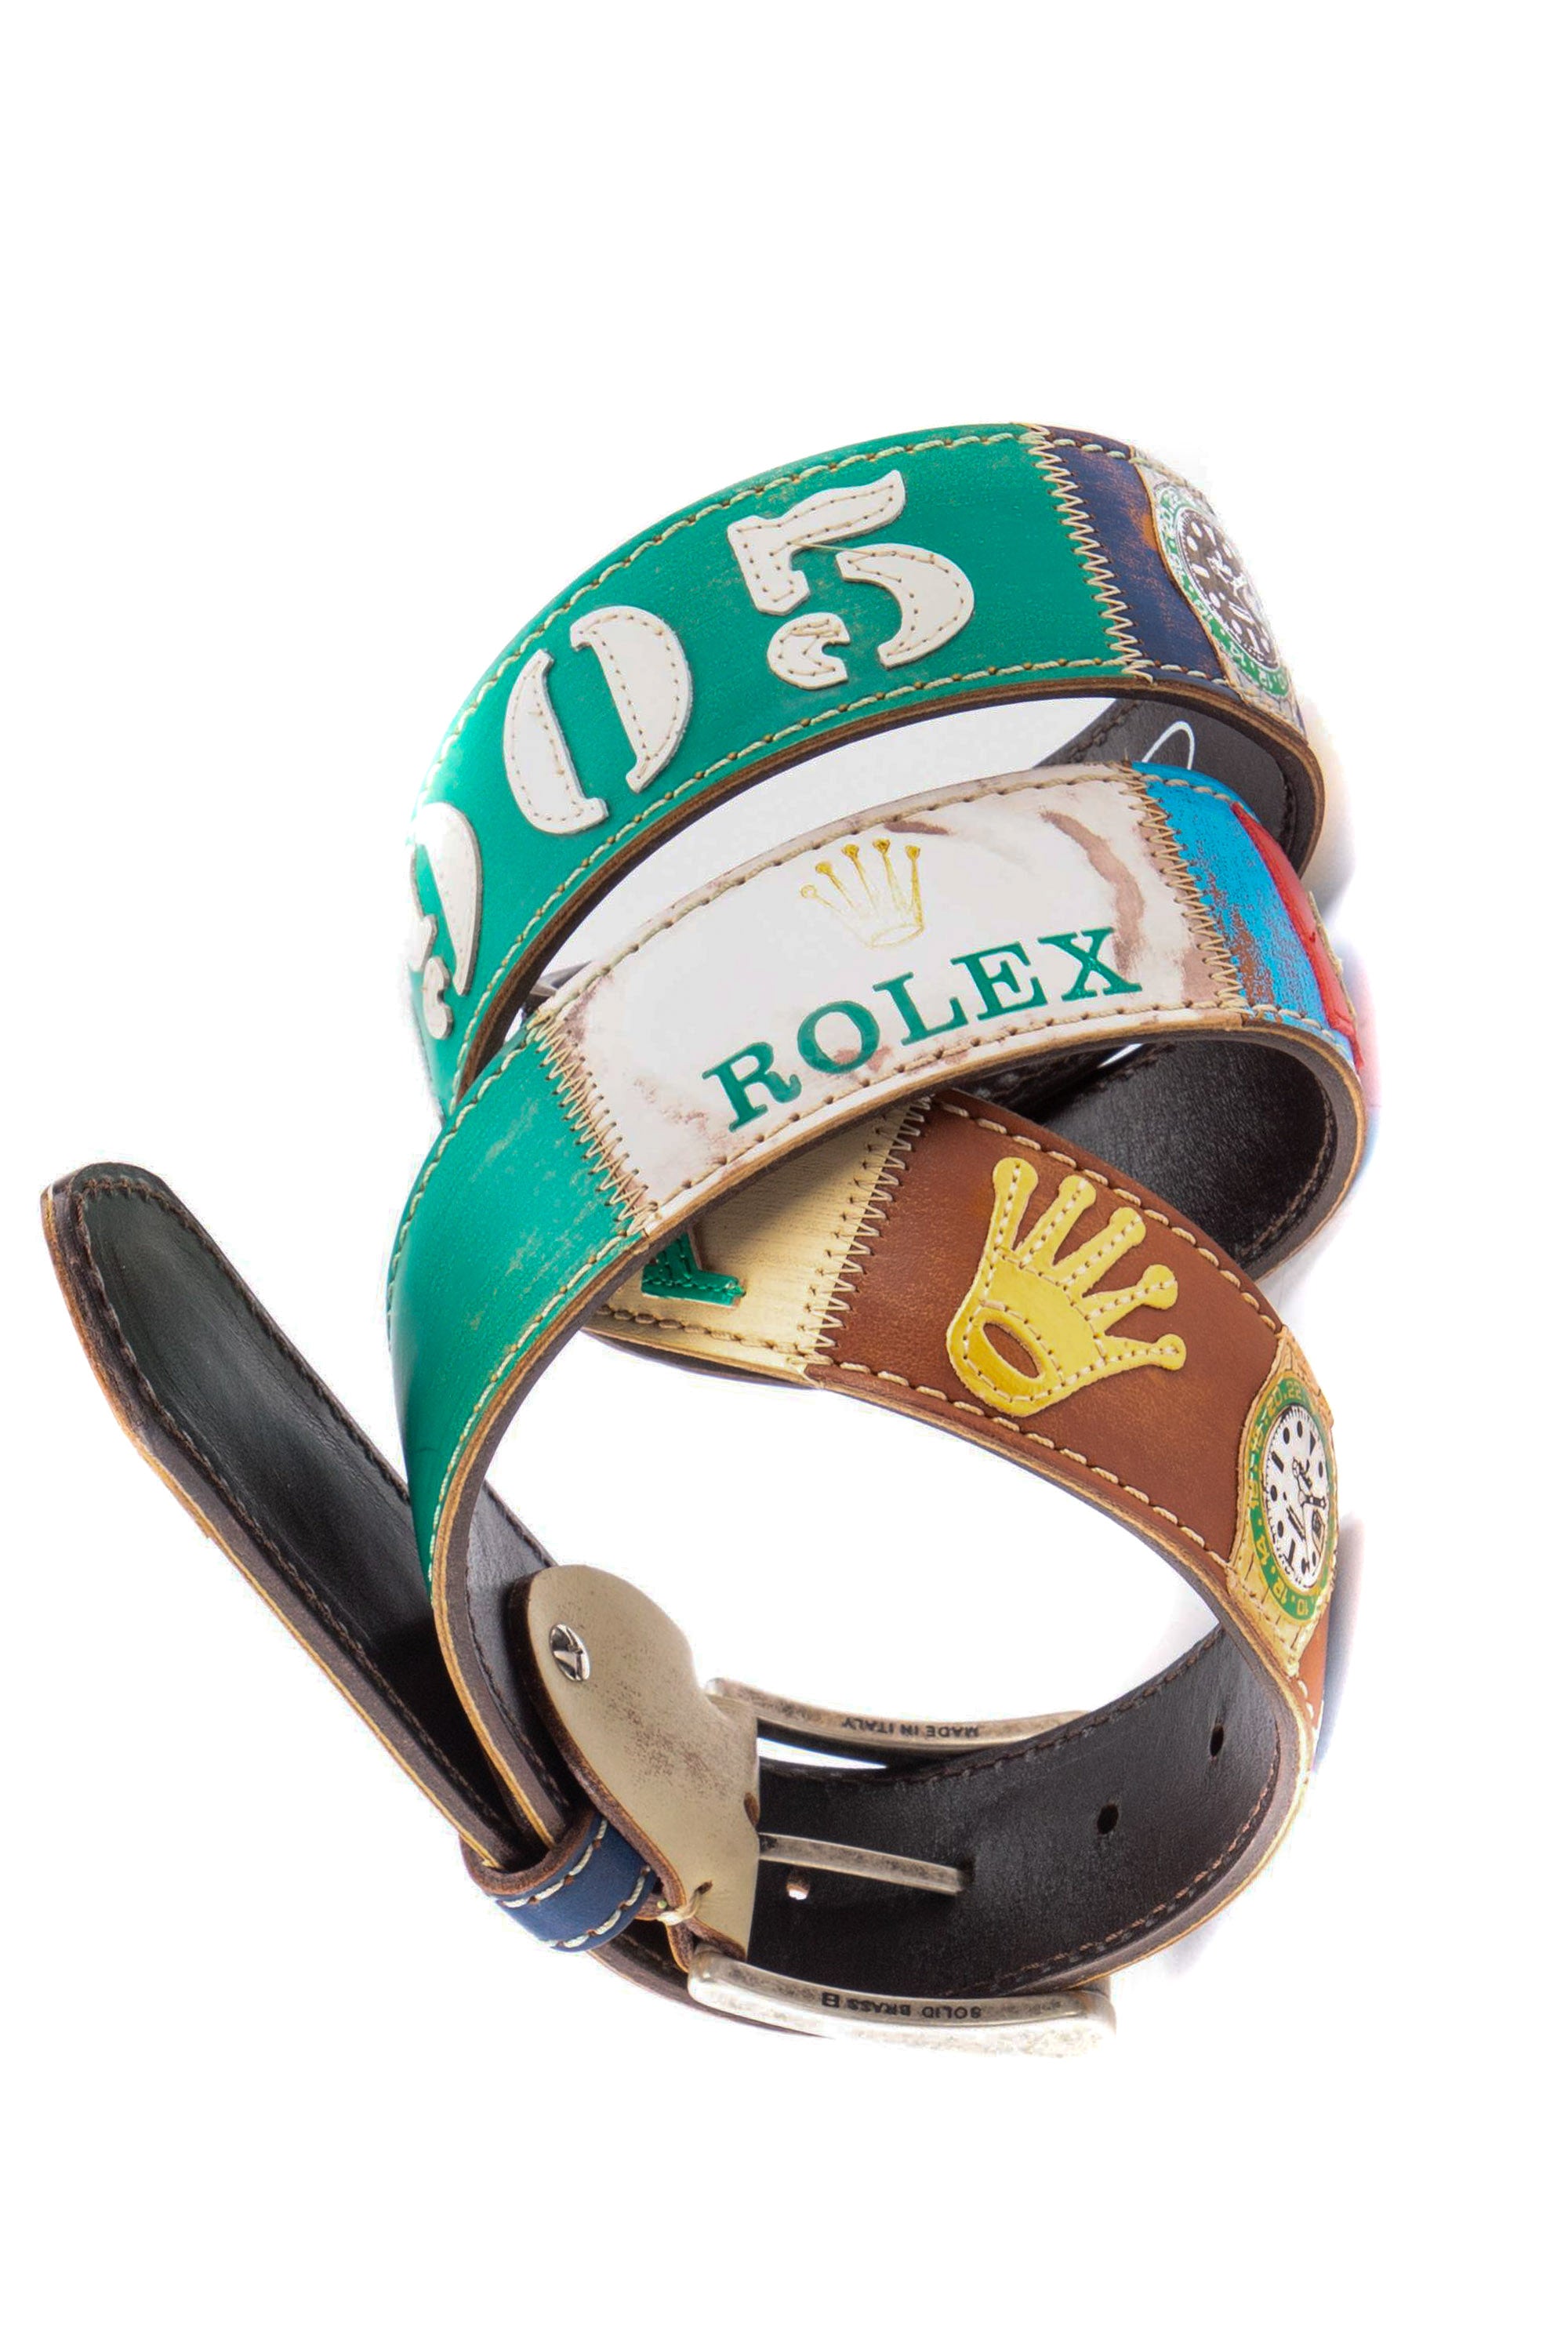 Rolex handcrafted belt